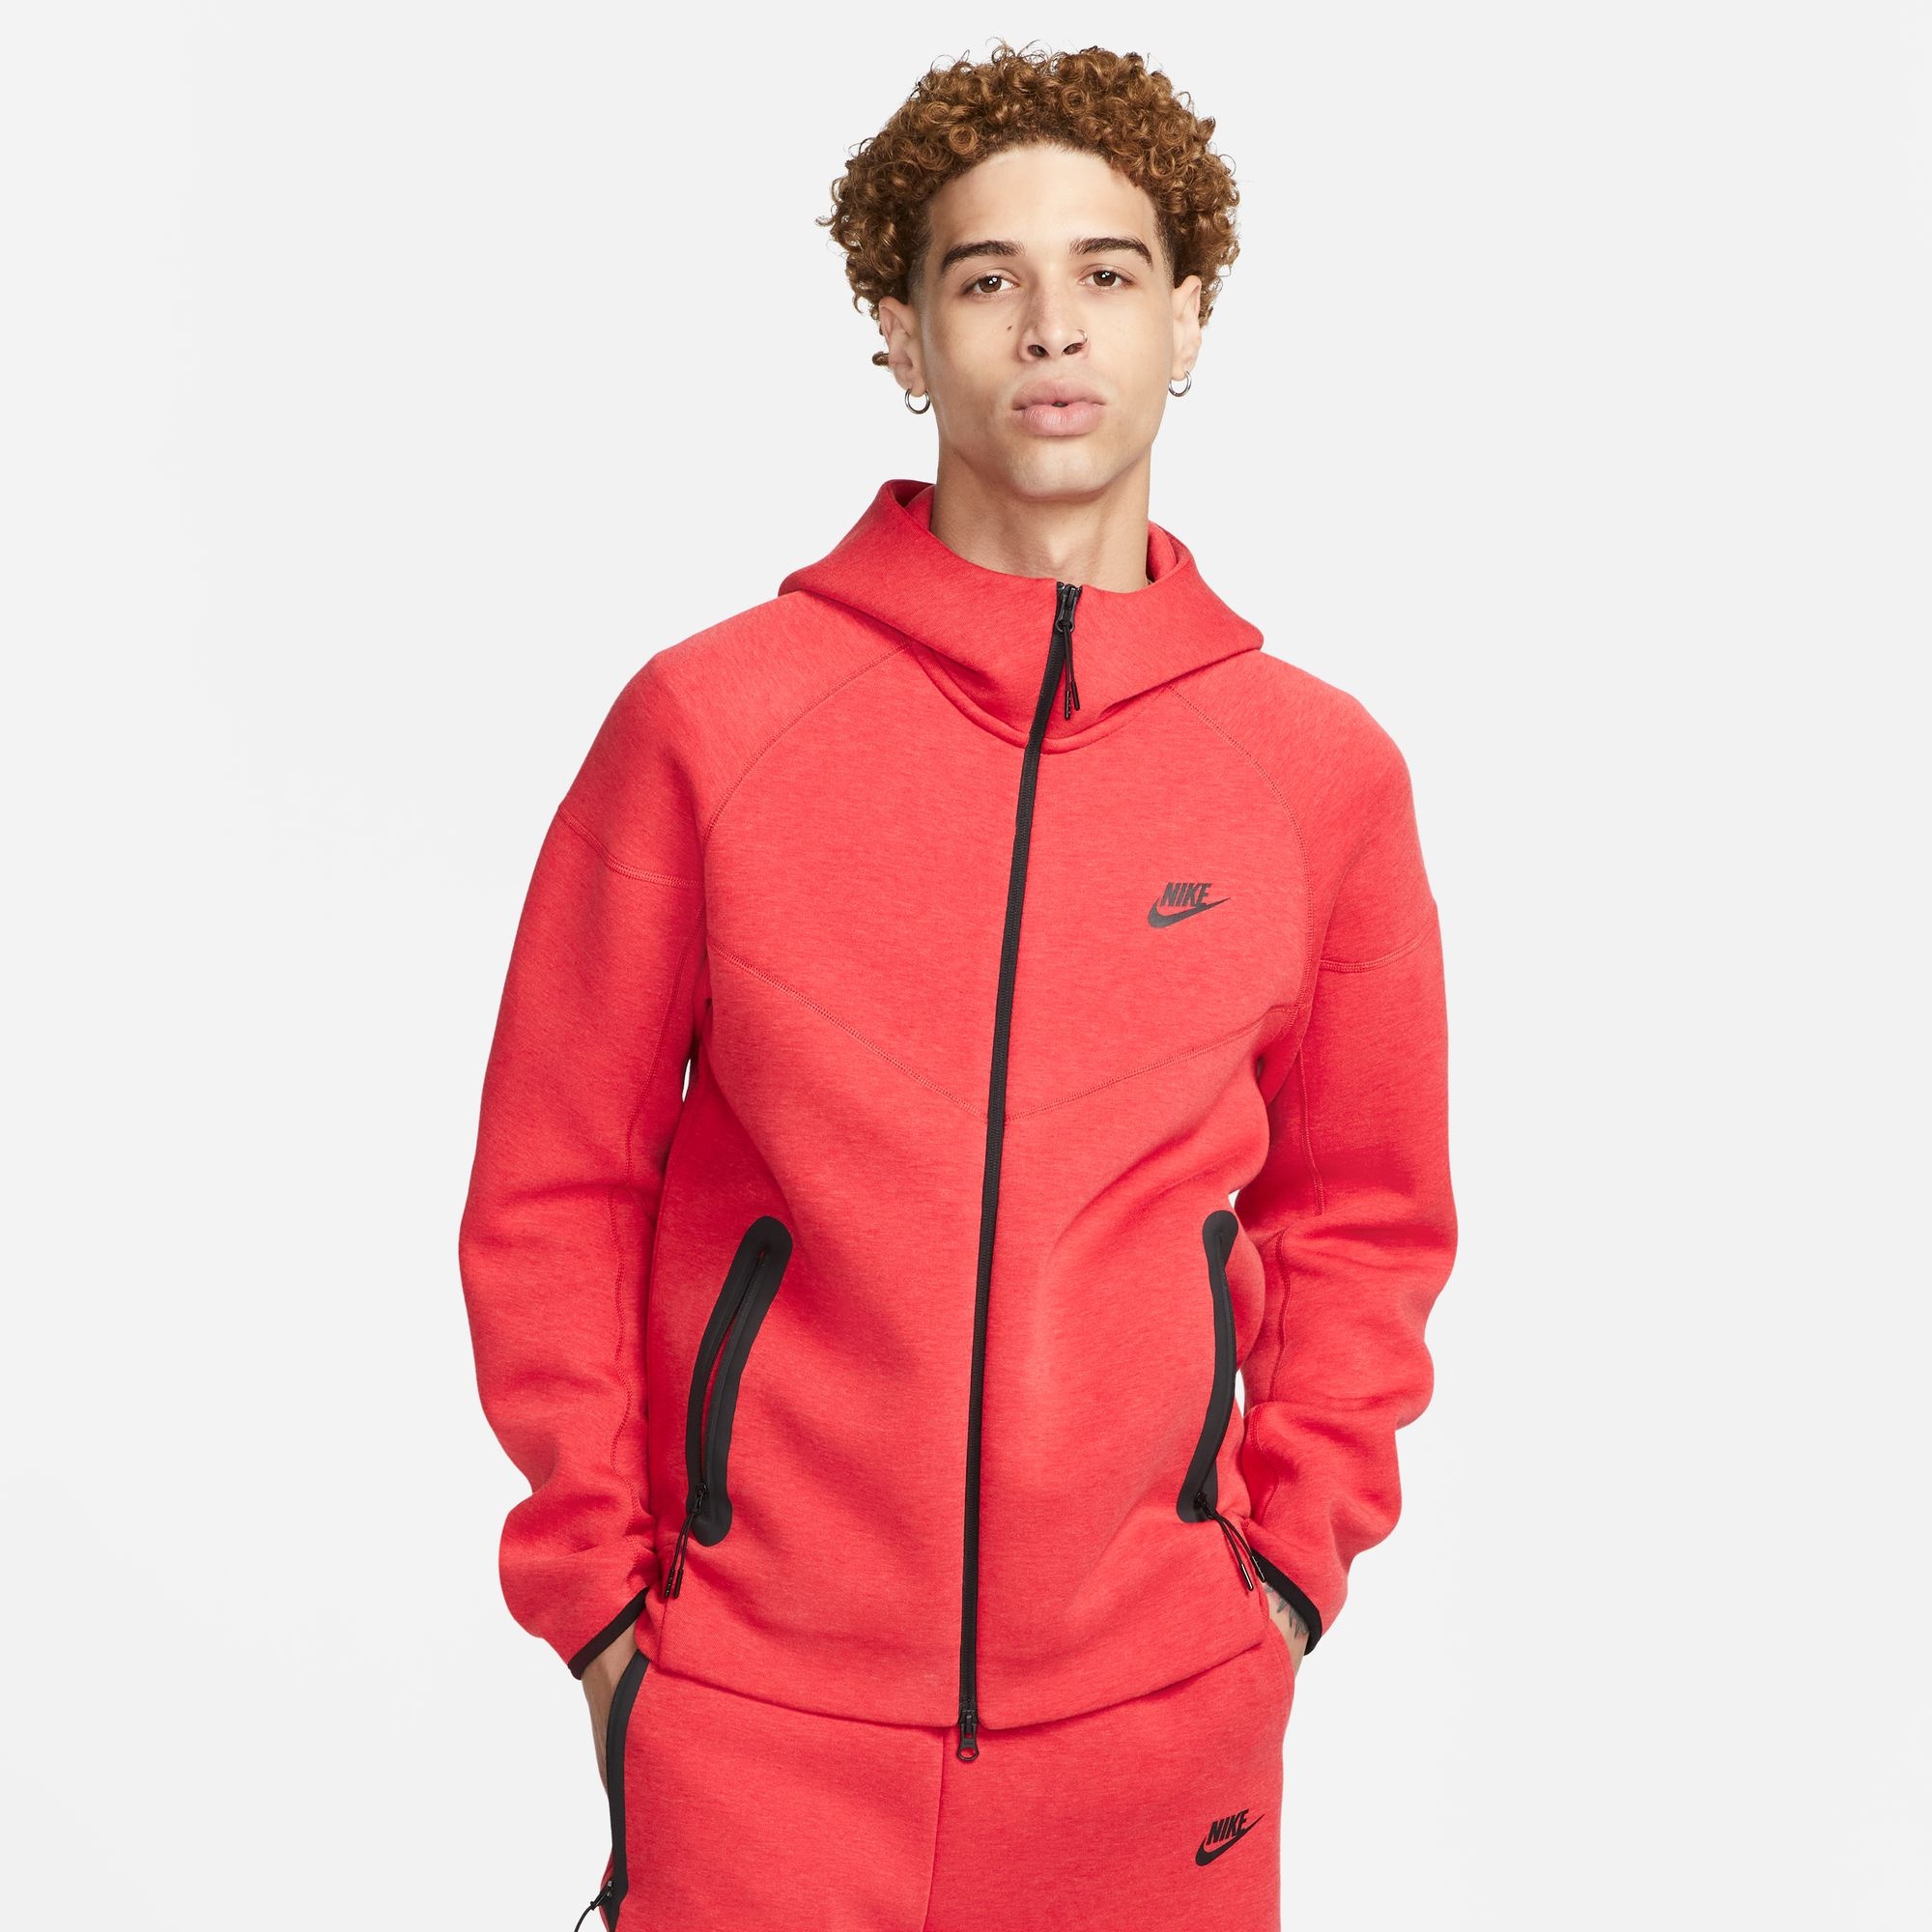 Men's Nike Tech Flece Jacket 'Light University Red' FB7921